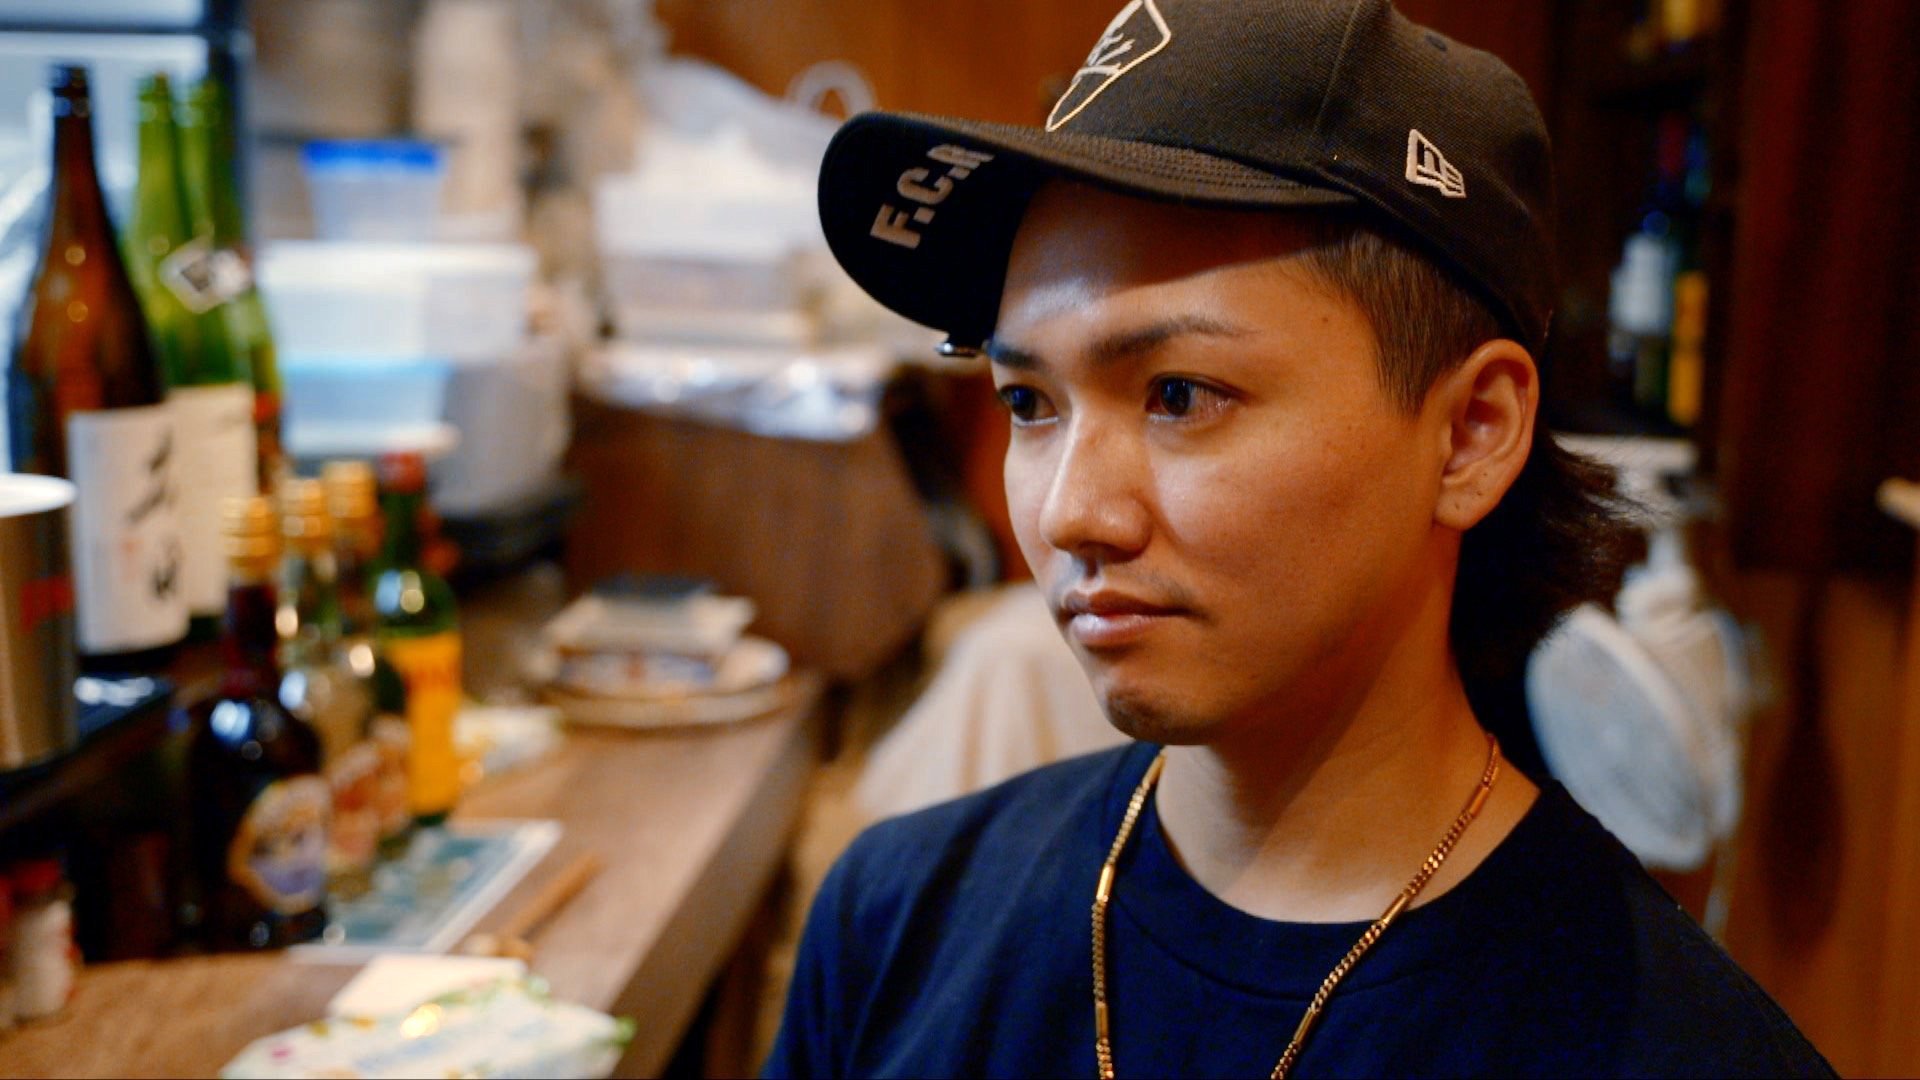 Ryu - young man in bar wearing baseball cap